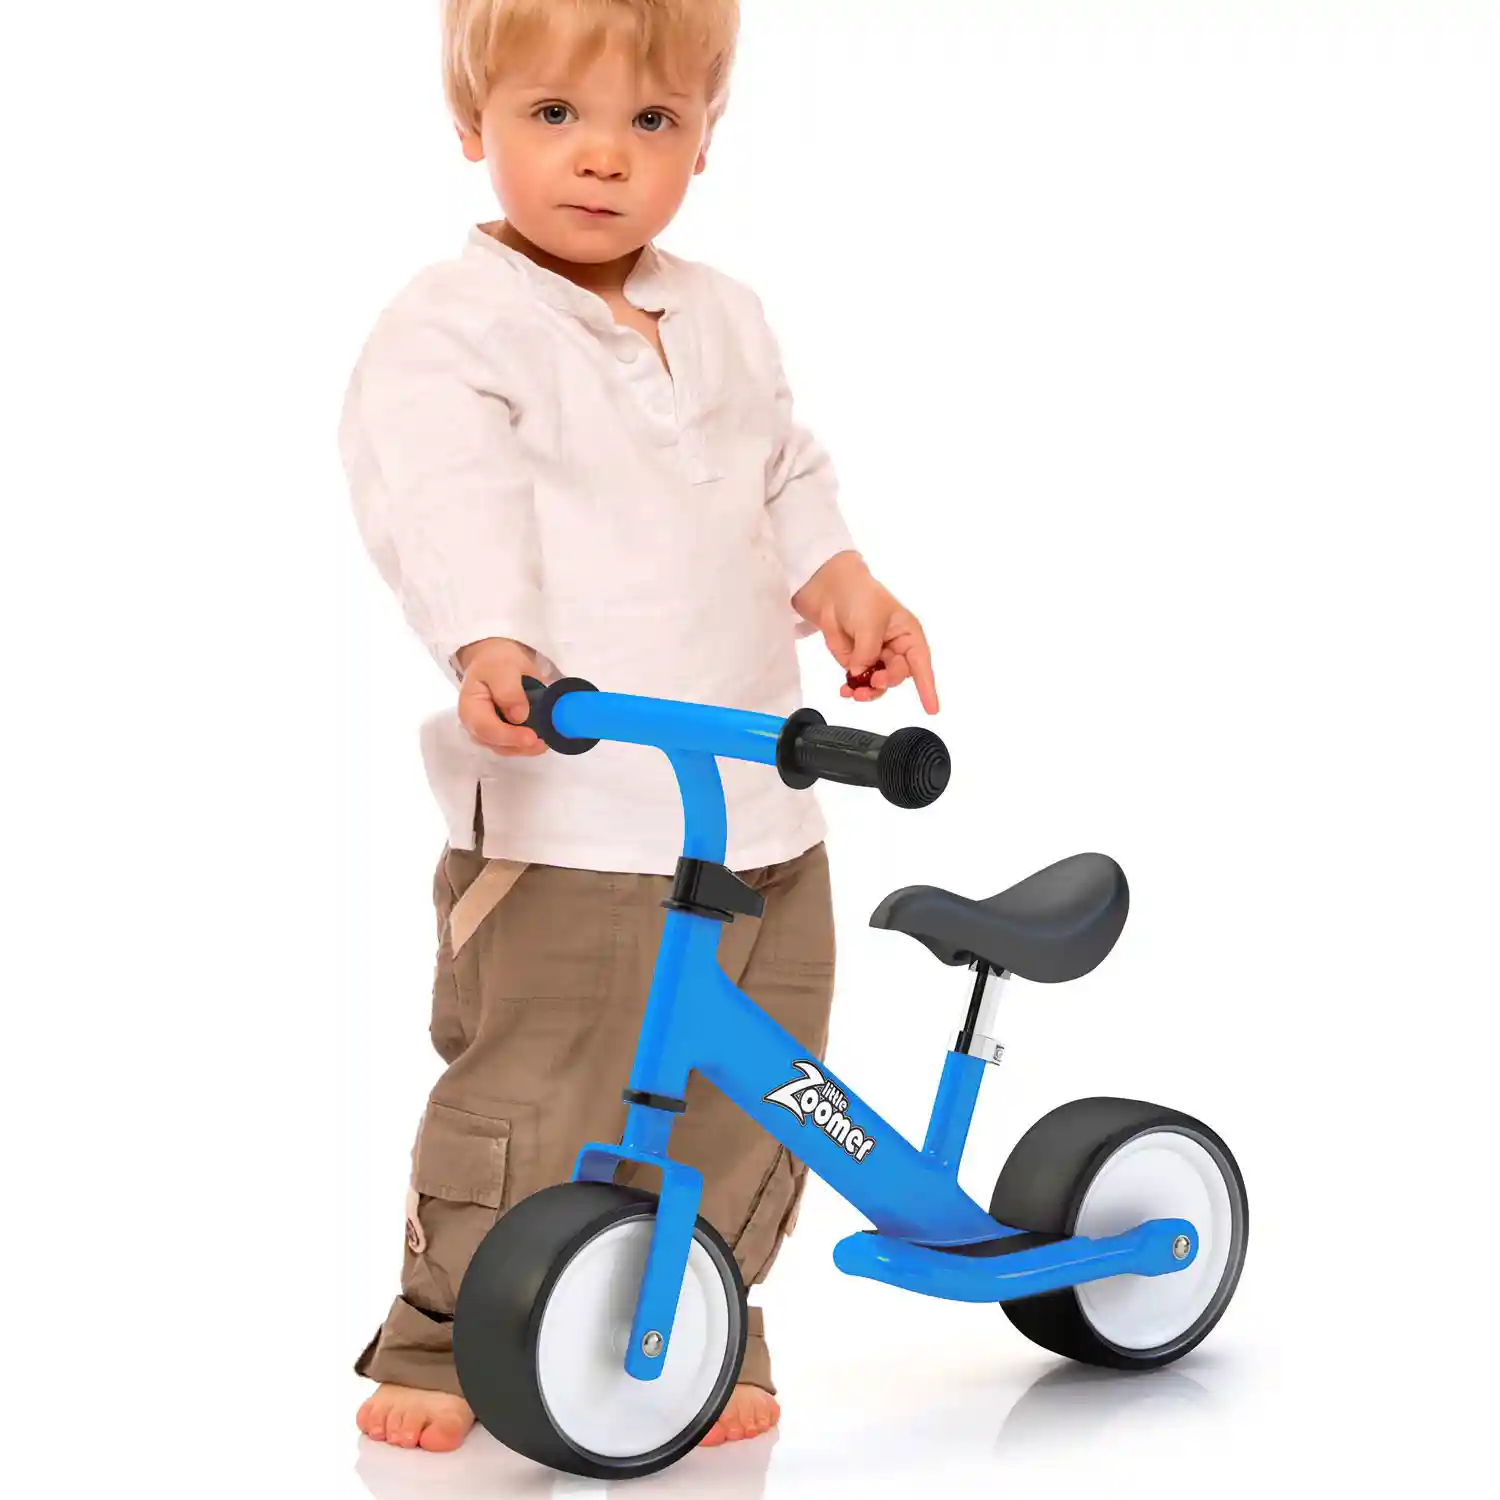 balance bikes toddlers blue kids bike walking first tiny wide wheels learn ride bicycle